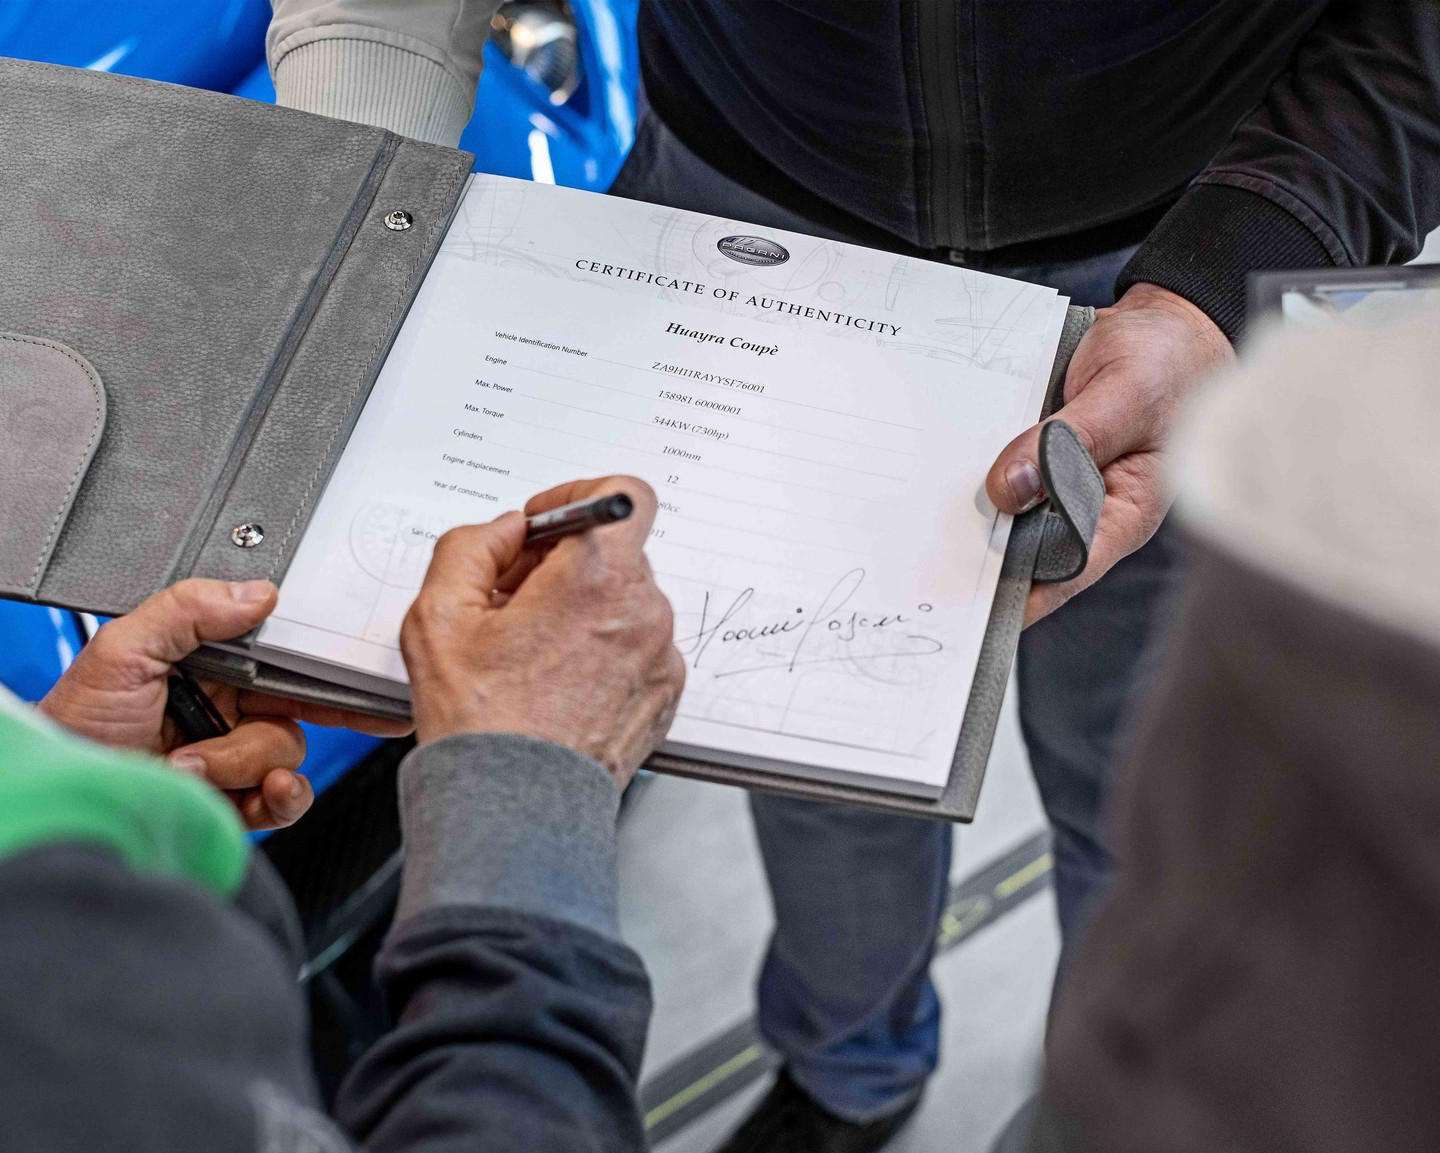 Pagani Automobili Official - More than 400 checks